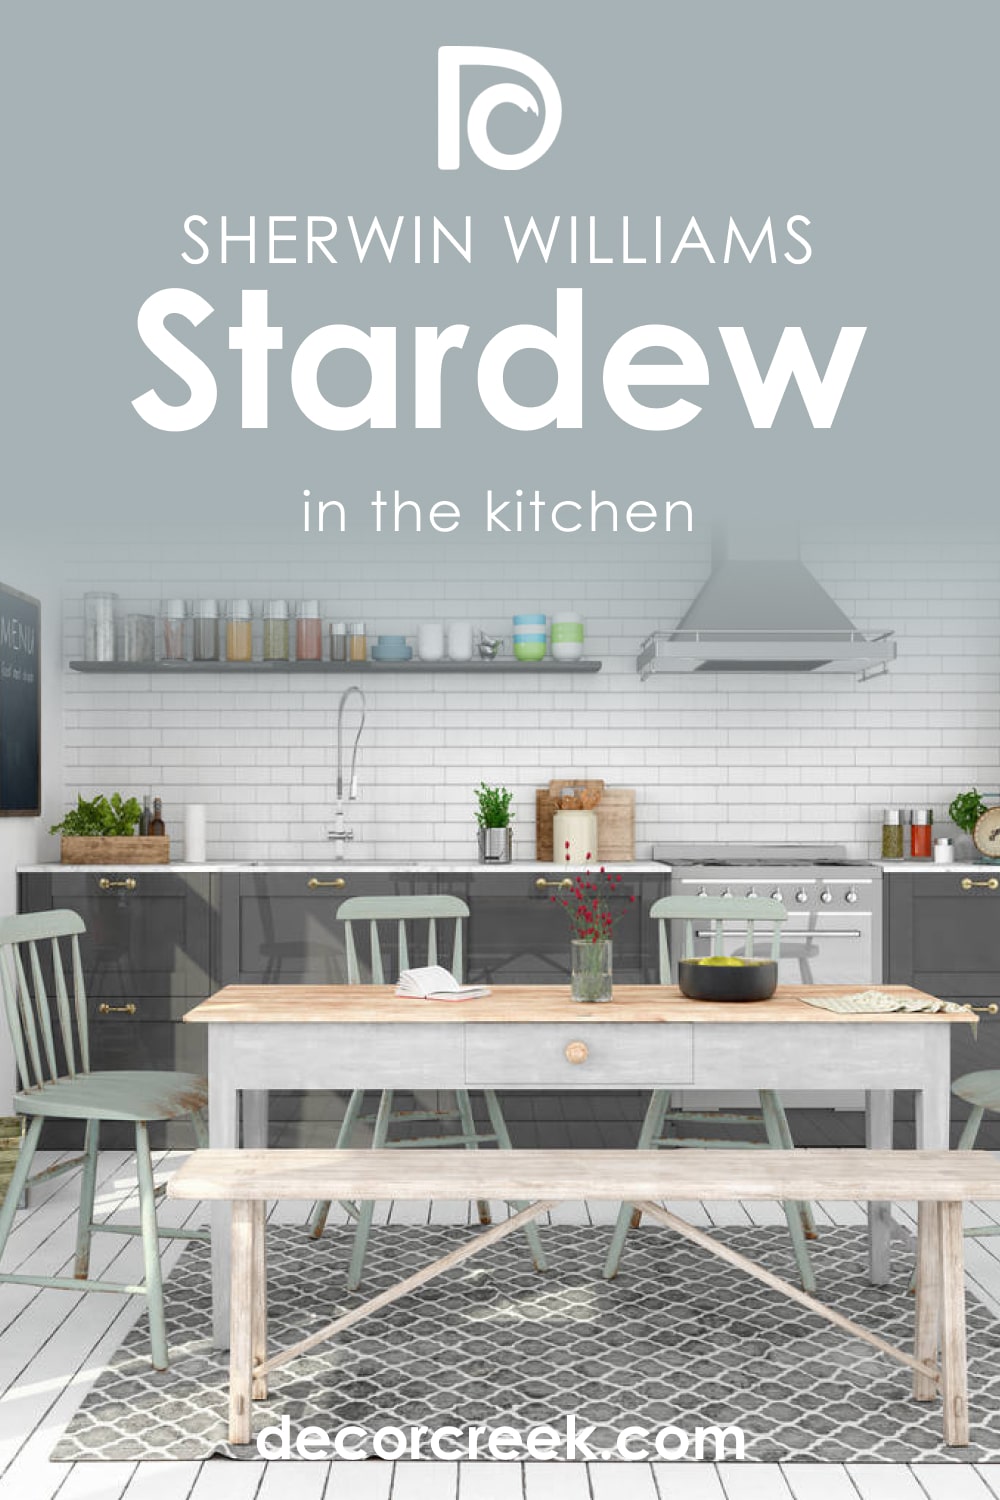 Stardew SW-9138 for the Kitchen